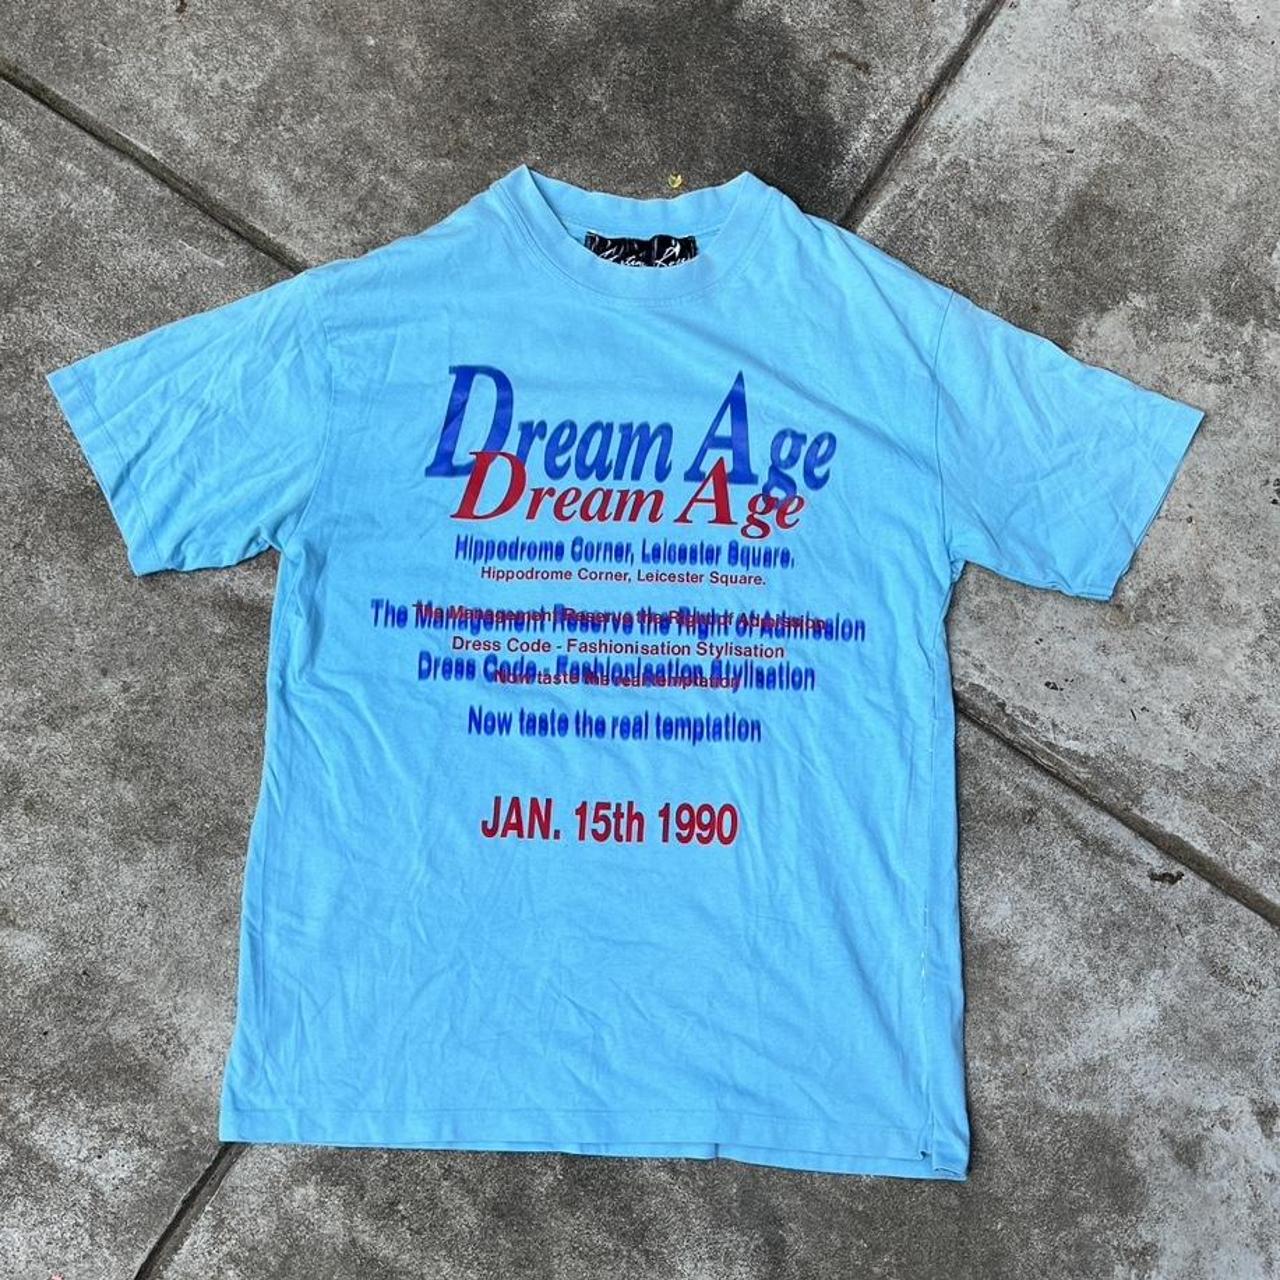 Martine Rose Dream Age T-Shirt w/ Tags - Blue T-Shirts, Clothing -  WROSE20201